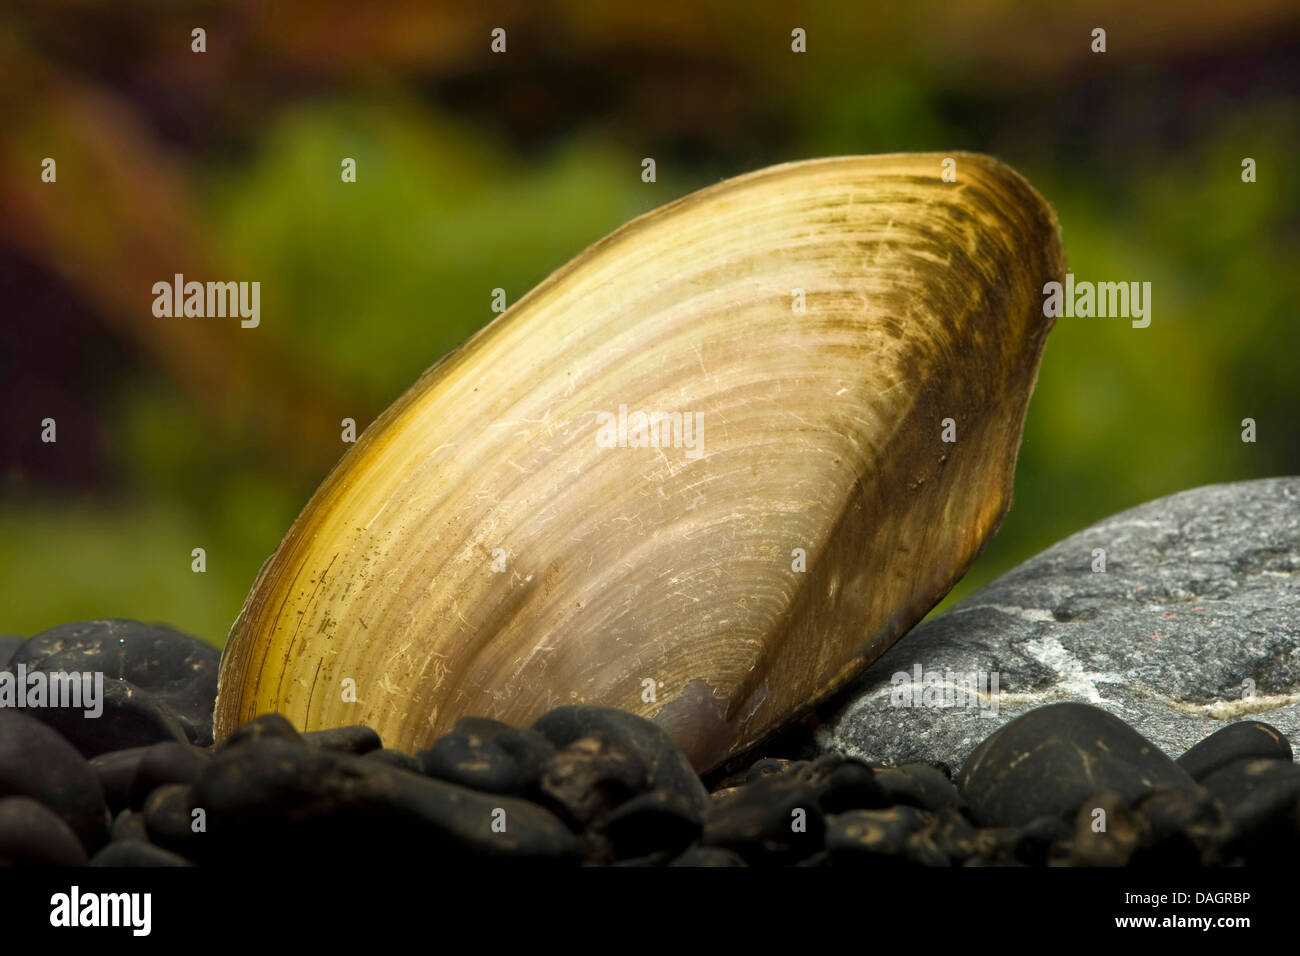 Thai aquaria mussel (Pilsbryoconcha exilis), at the bottom of an aquarium Stock Photo